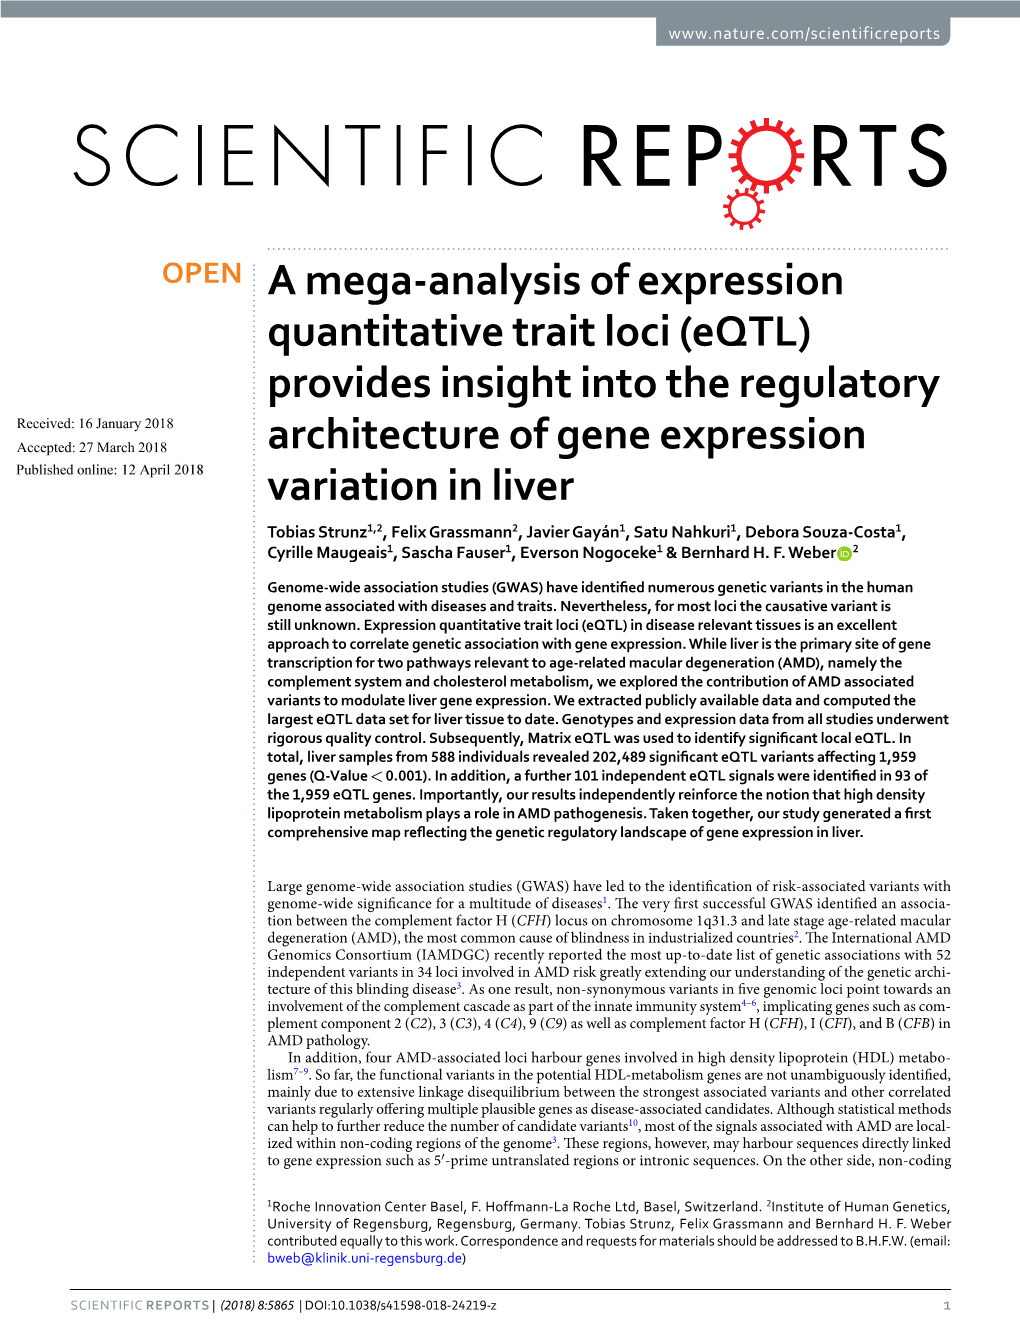 A Mega-Analysis of Expression Quantitative Trait Loci (Eqtl) Provides Insight Into the Regulatory Architecture of Gene Expressio